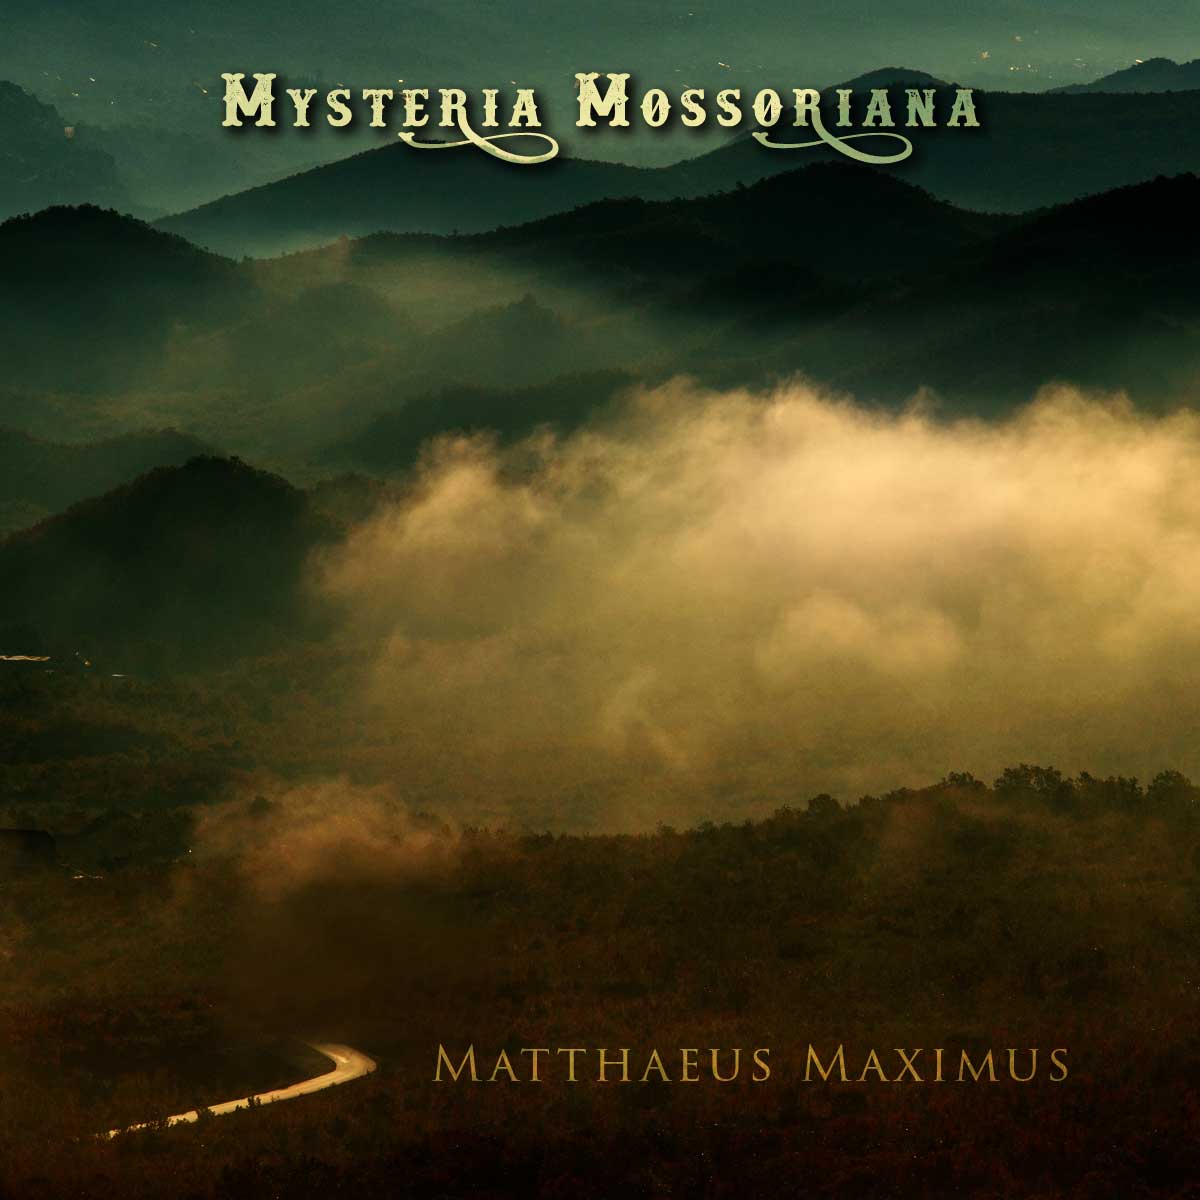 Mysteria Mossoriana